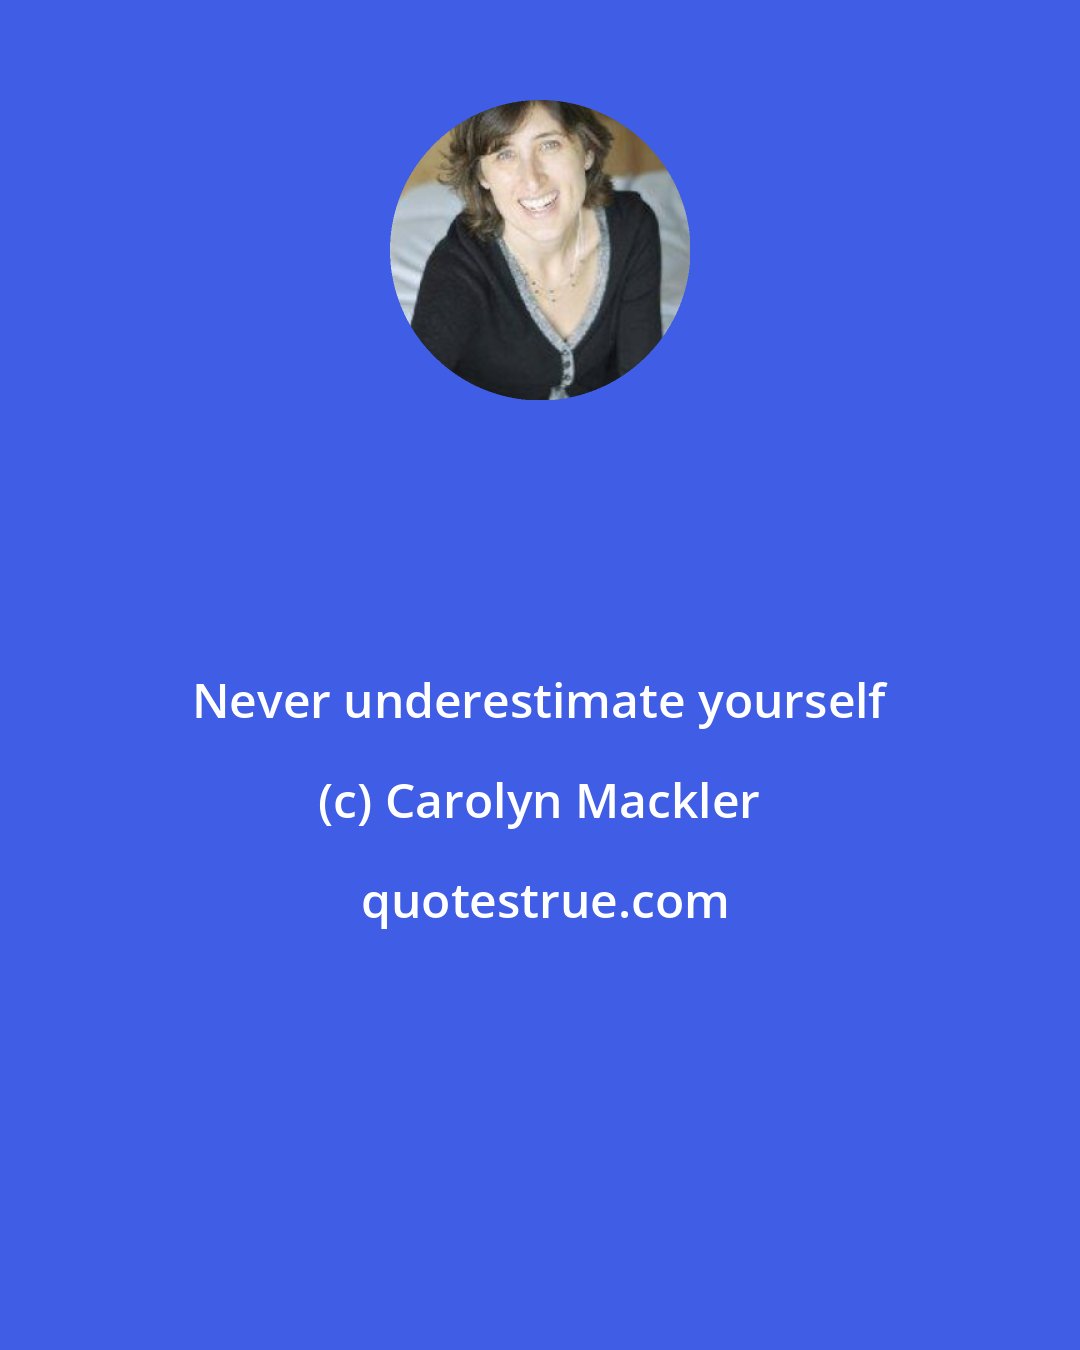 Carolyn Mackler: Never underestimate yourself